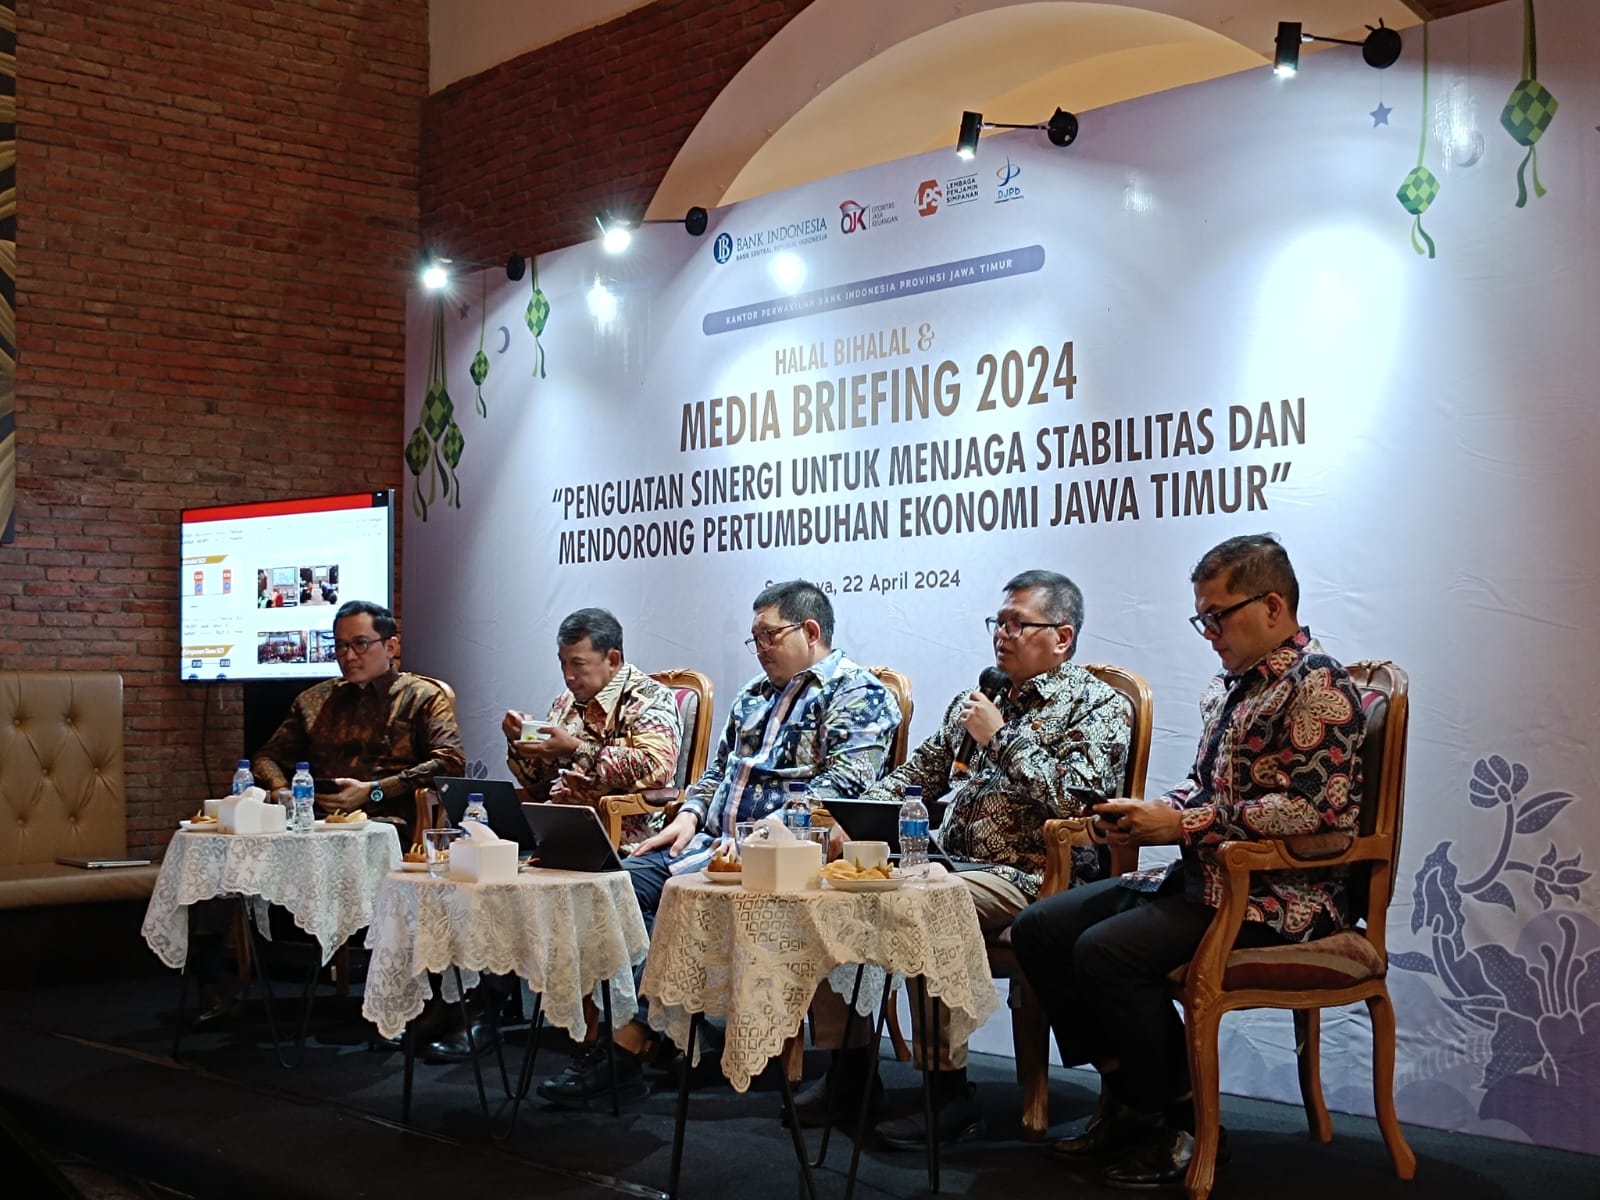 Pemaparan materi dalam penguatan sinergi untuk menjaga stabilitas dan mendorong pertumbuhan ekonomi Jatim yang diadakan oleh Bank Indonesia Jatim di Surabaya, Senin (22/4/2024). Foto: Risky suarasurabaya.net